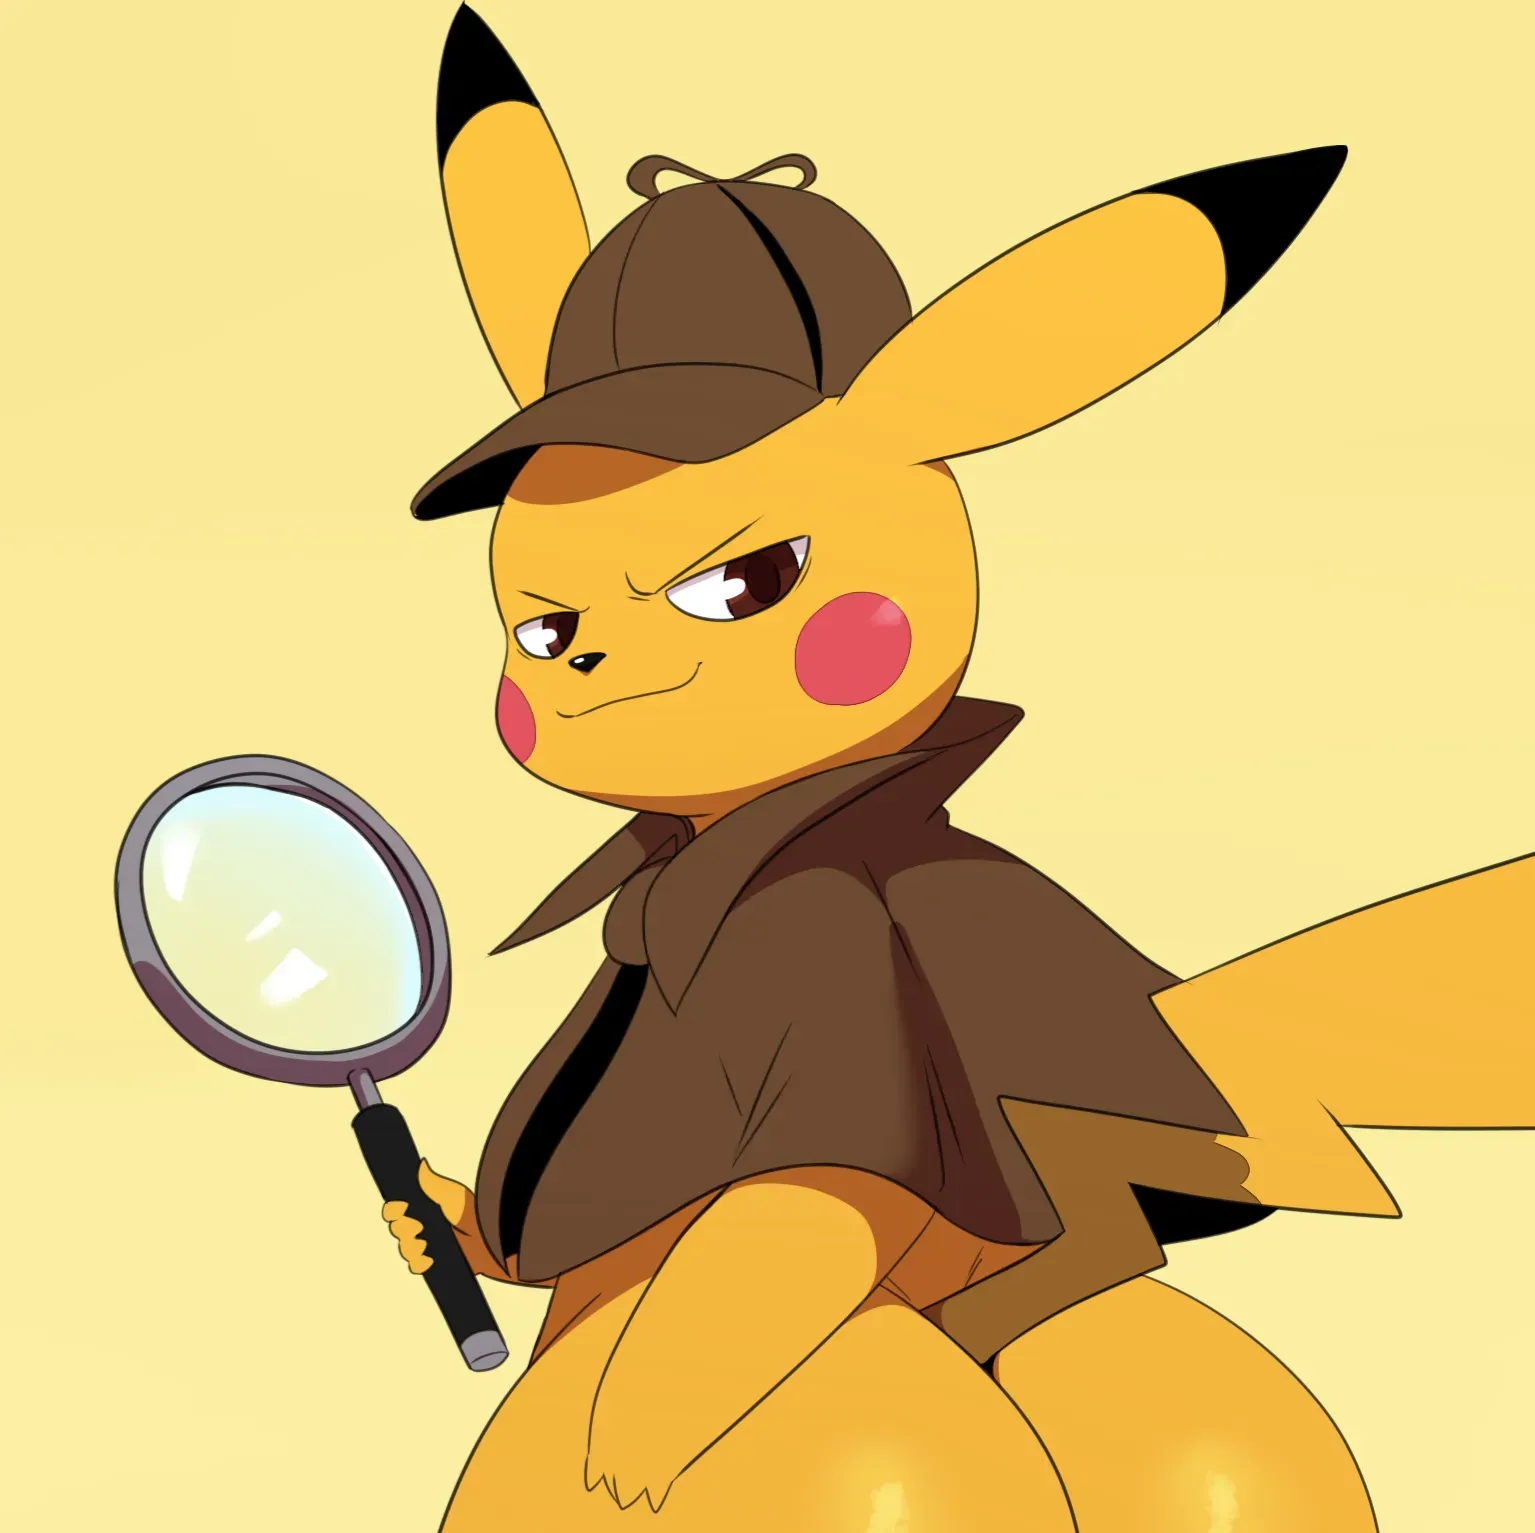 Avatar of Detective Pikachu